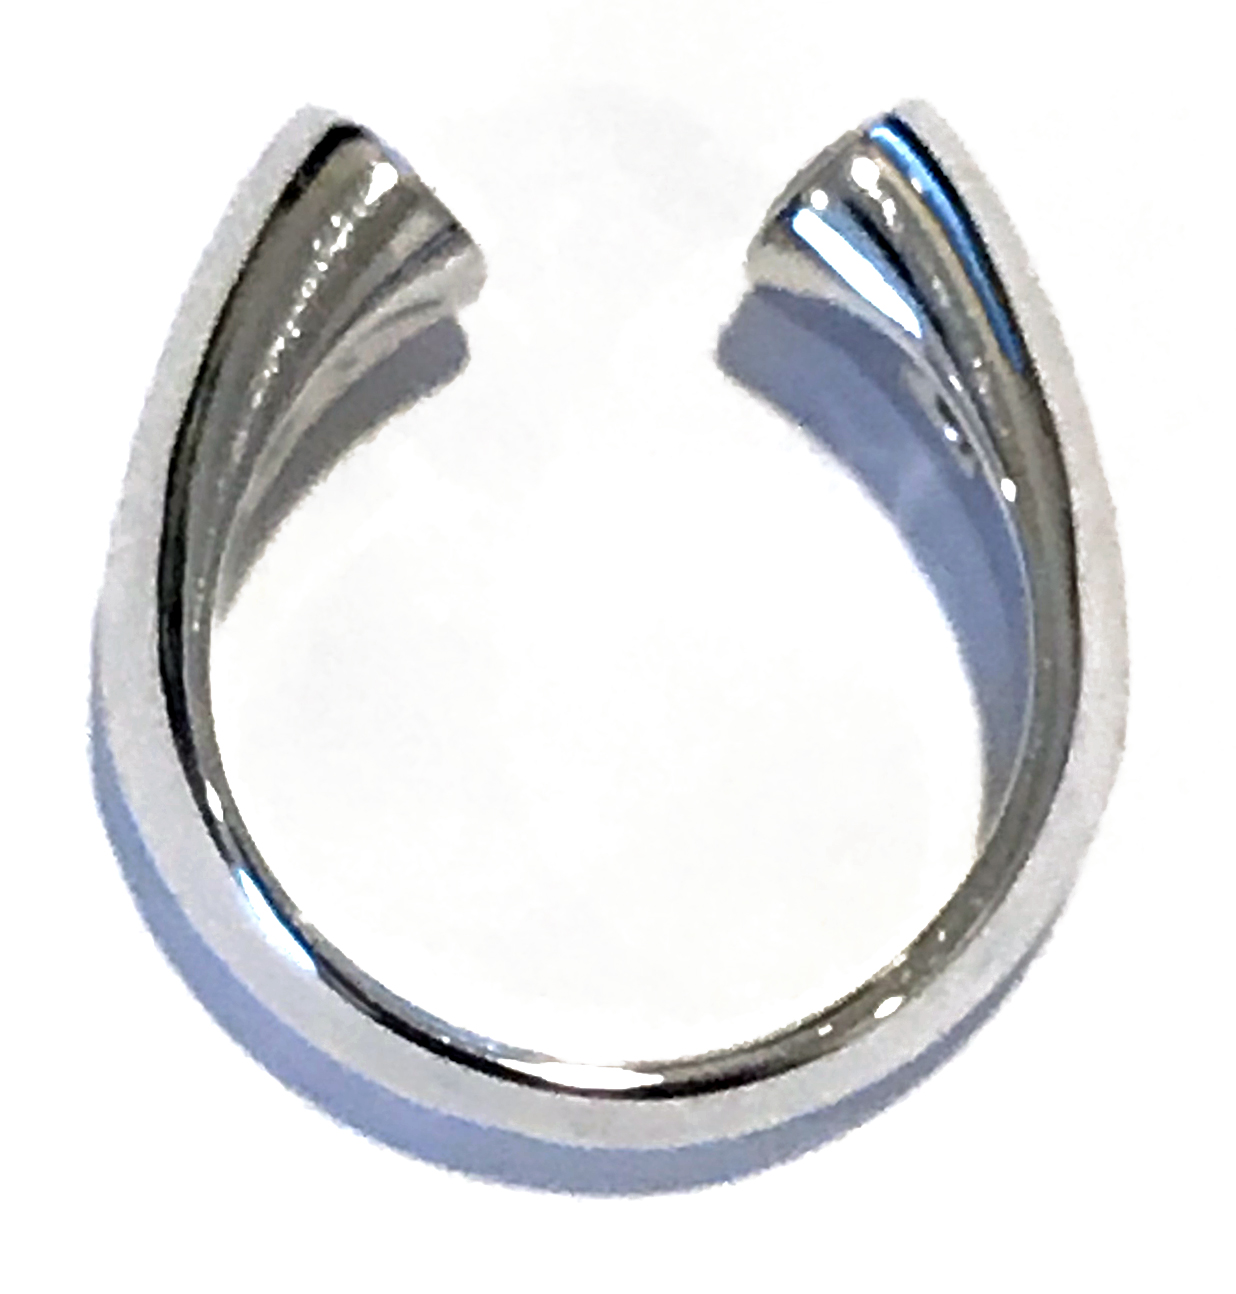 RING 975 - Aquamarine and Diamonds in 18kt White Gold - Michael Alexander  Jewelry